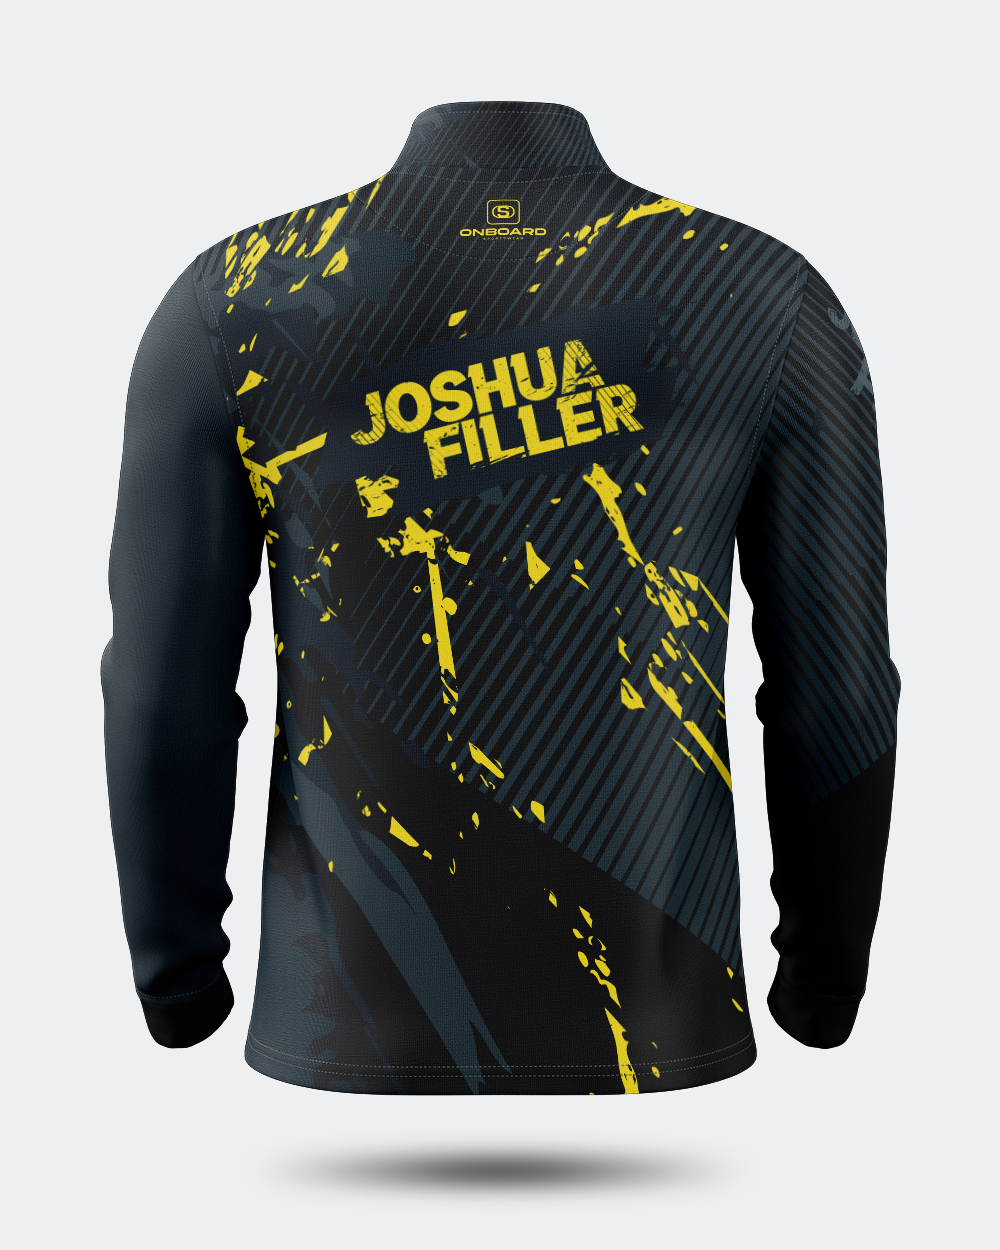 Joshua 'KillerFiller' Lightweight Jacket